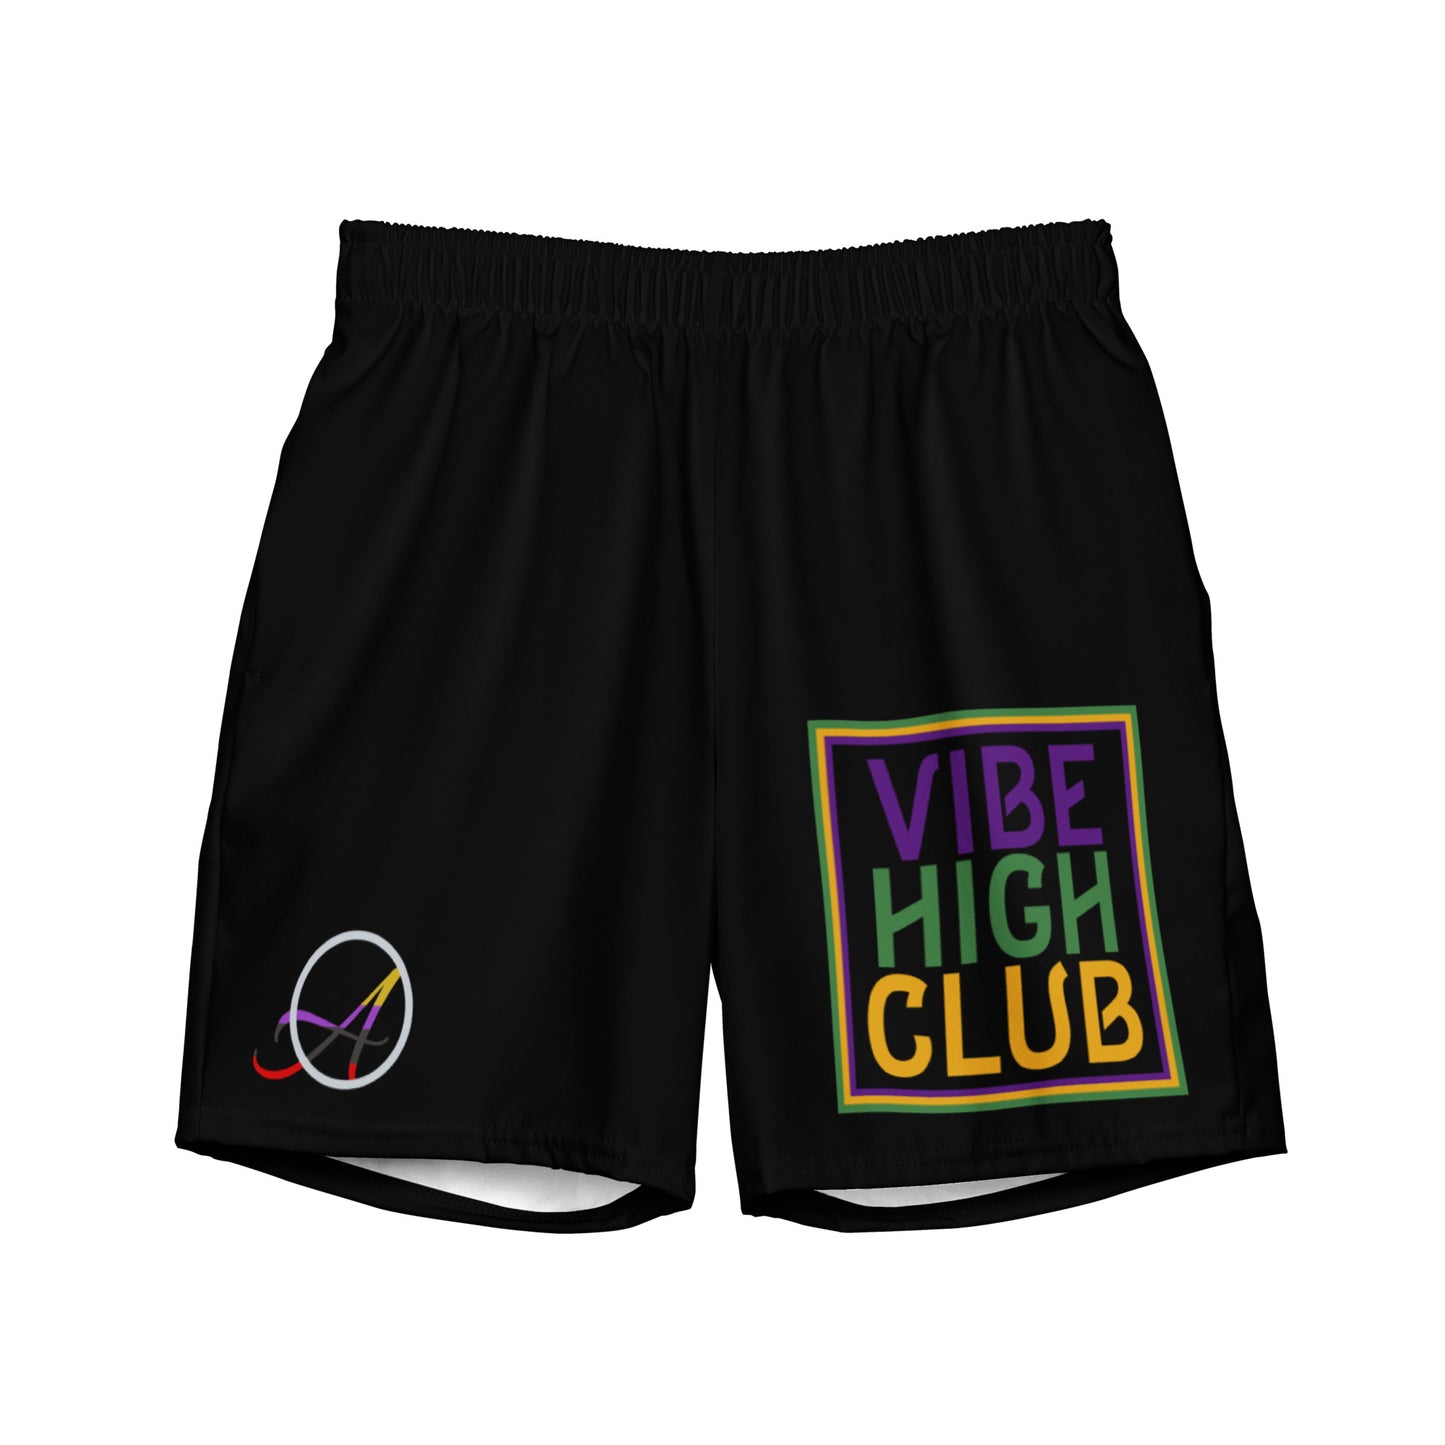 Vibe High Club Men's swim trunks